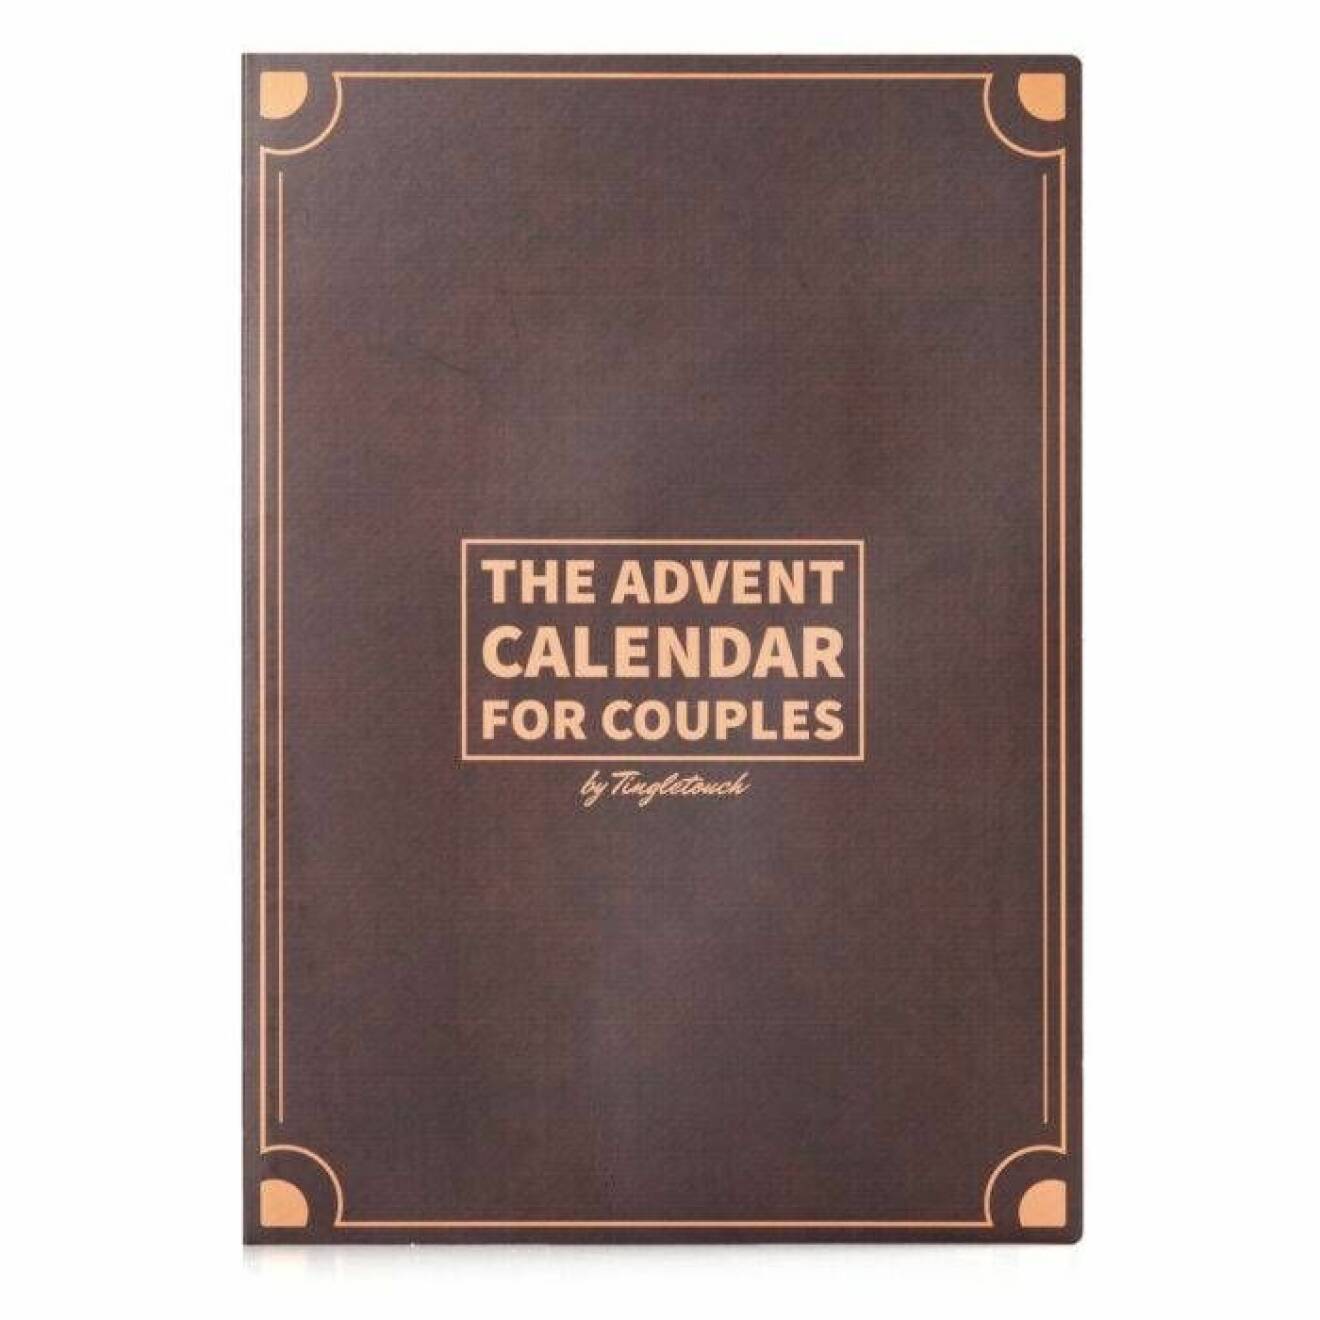 The Advent Calendar for couples